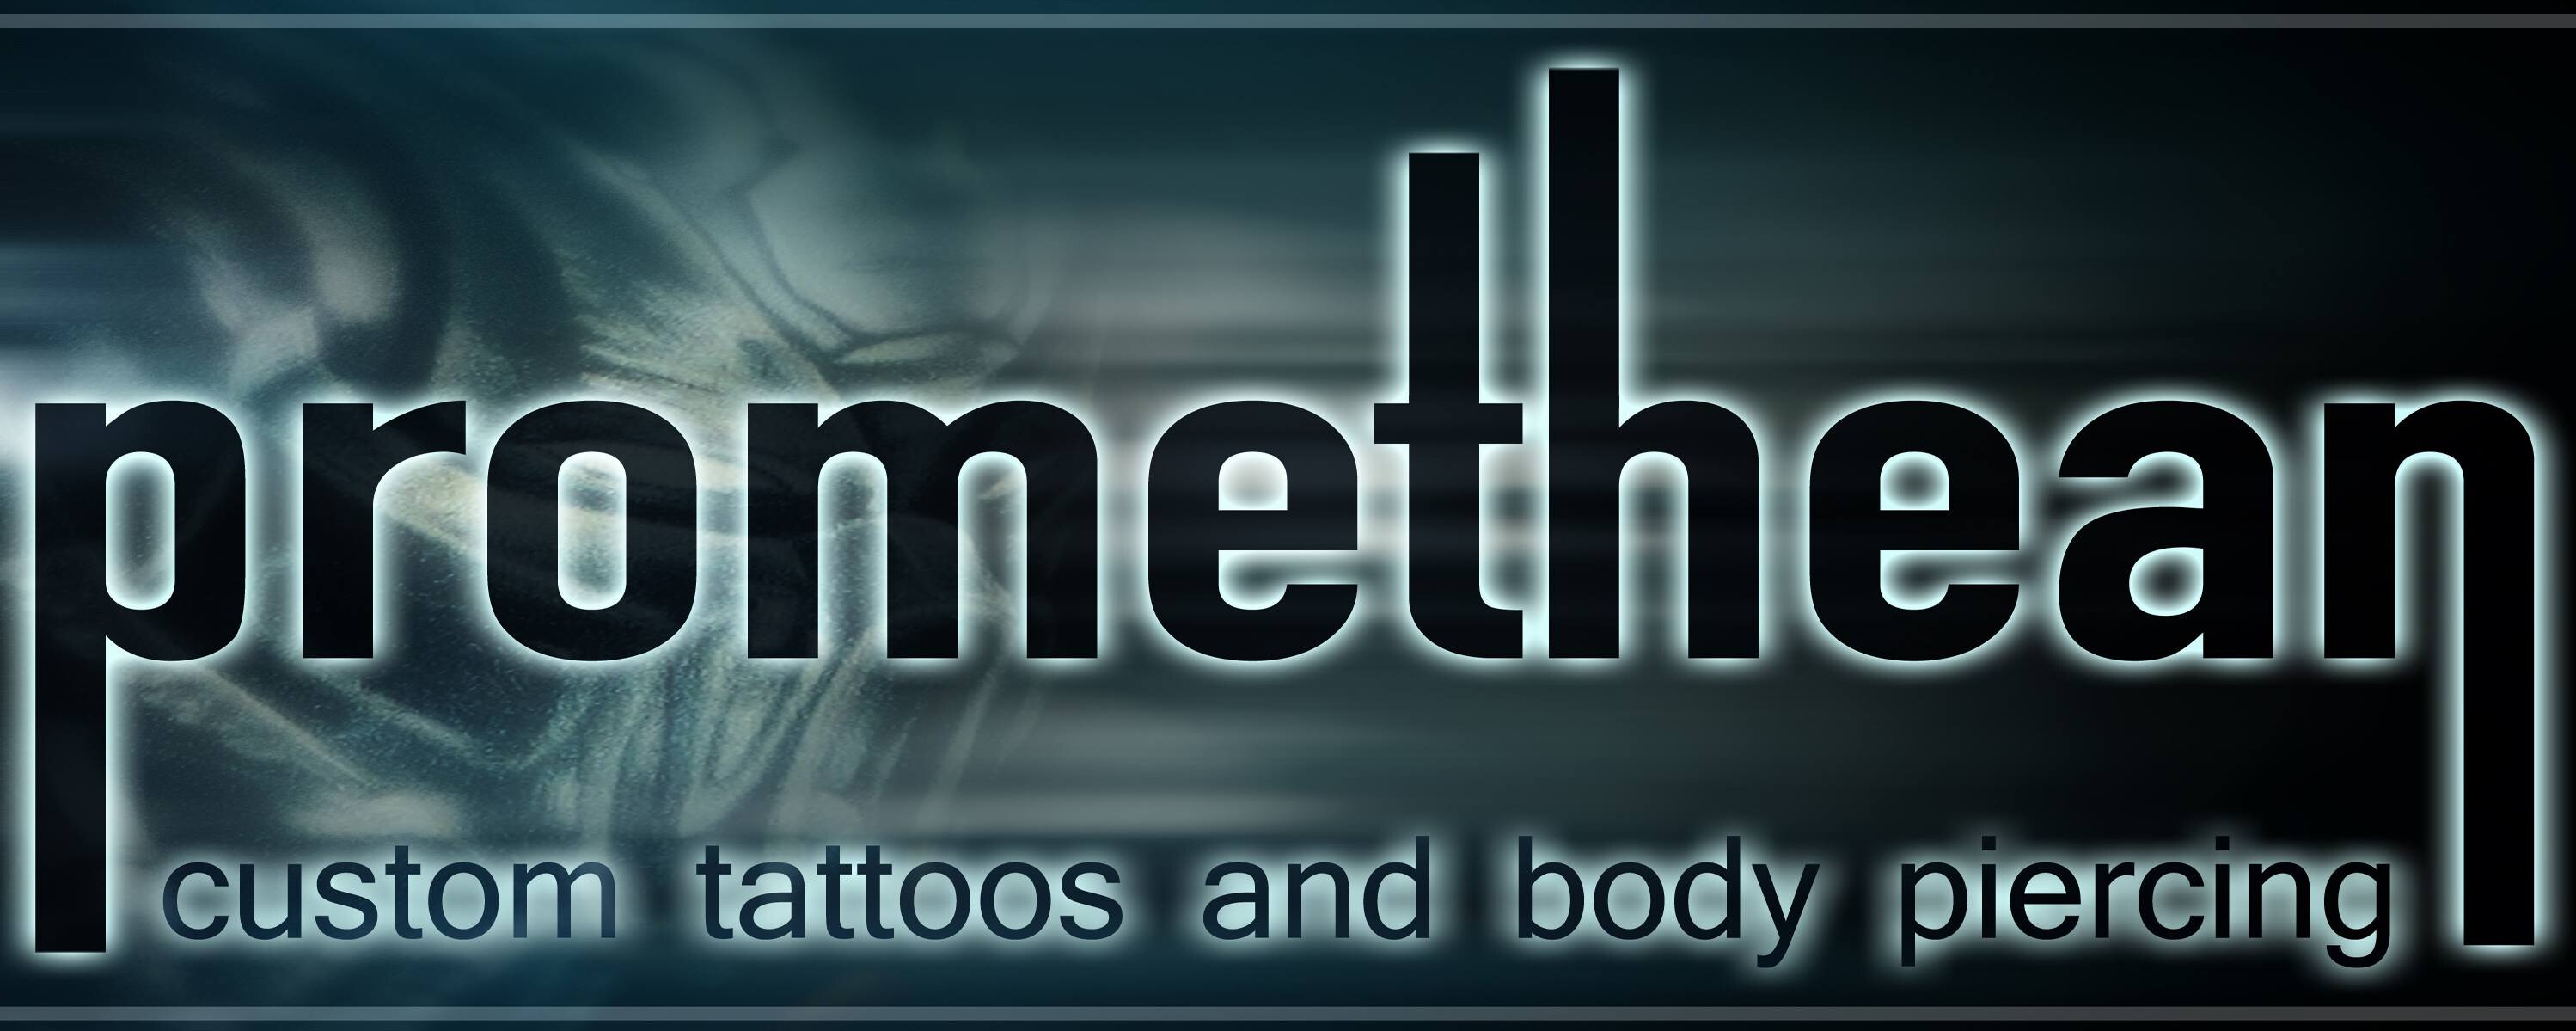 Promethean Tattoo & Body Piercing